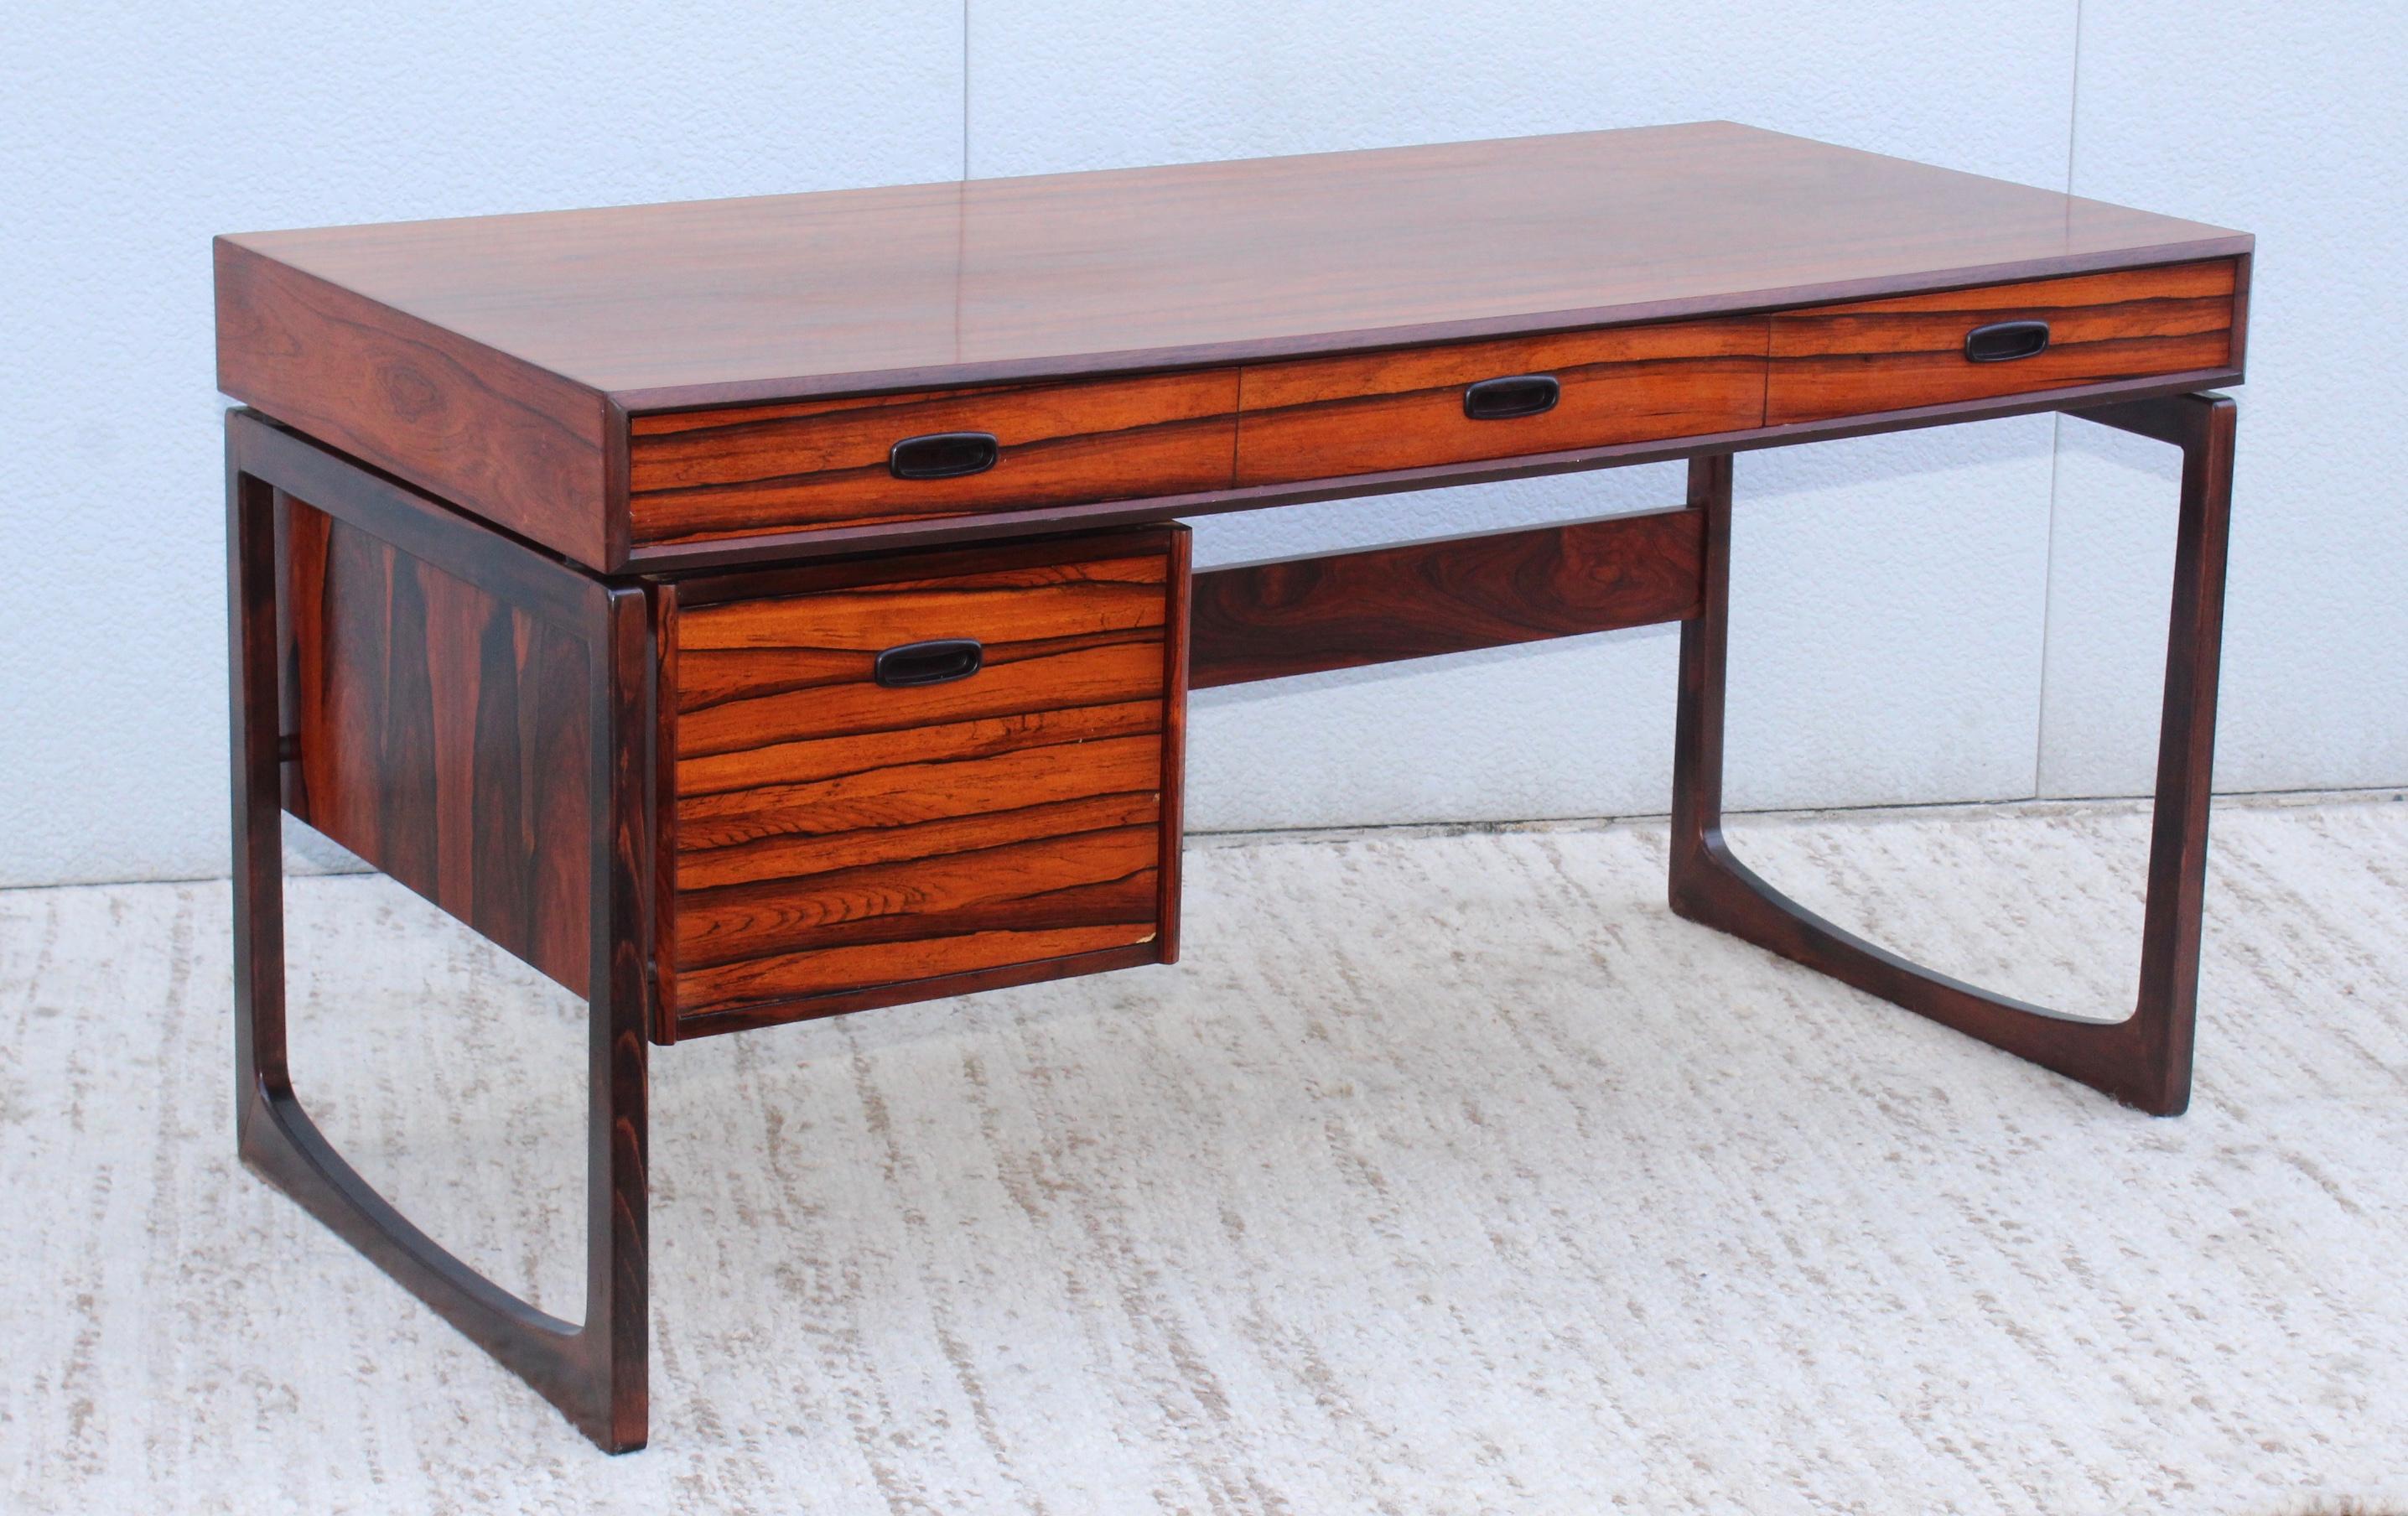 Stunning 1970s modern Norwegian rosewood desk by Ganddal Mobelfabrik, in vintage original condition.